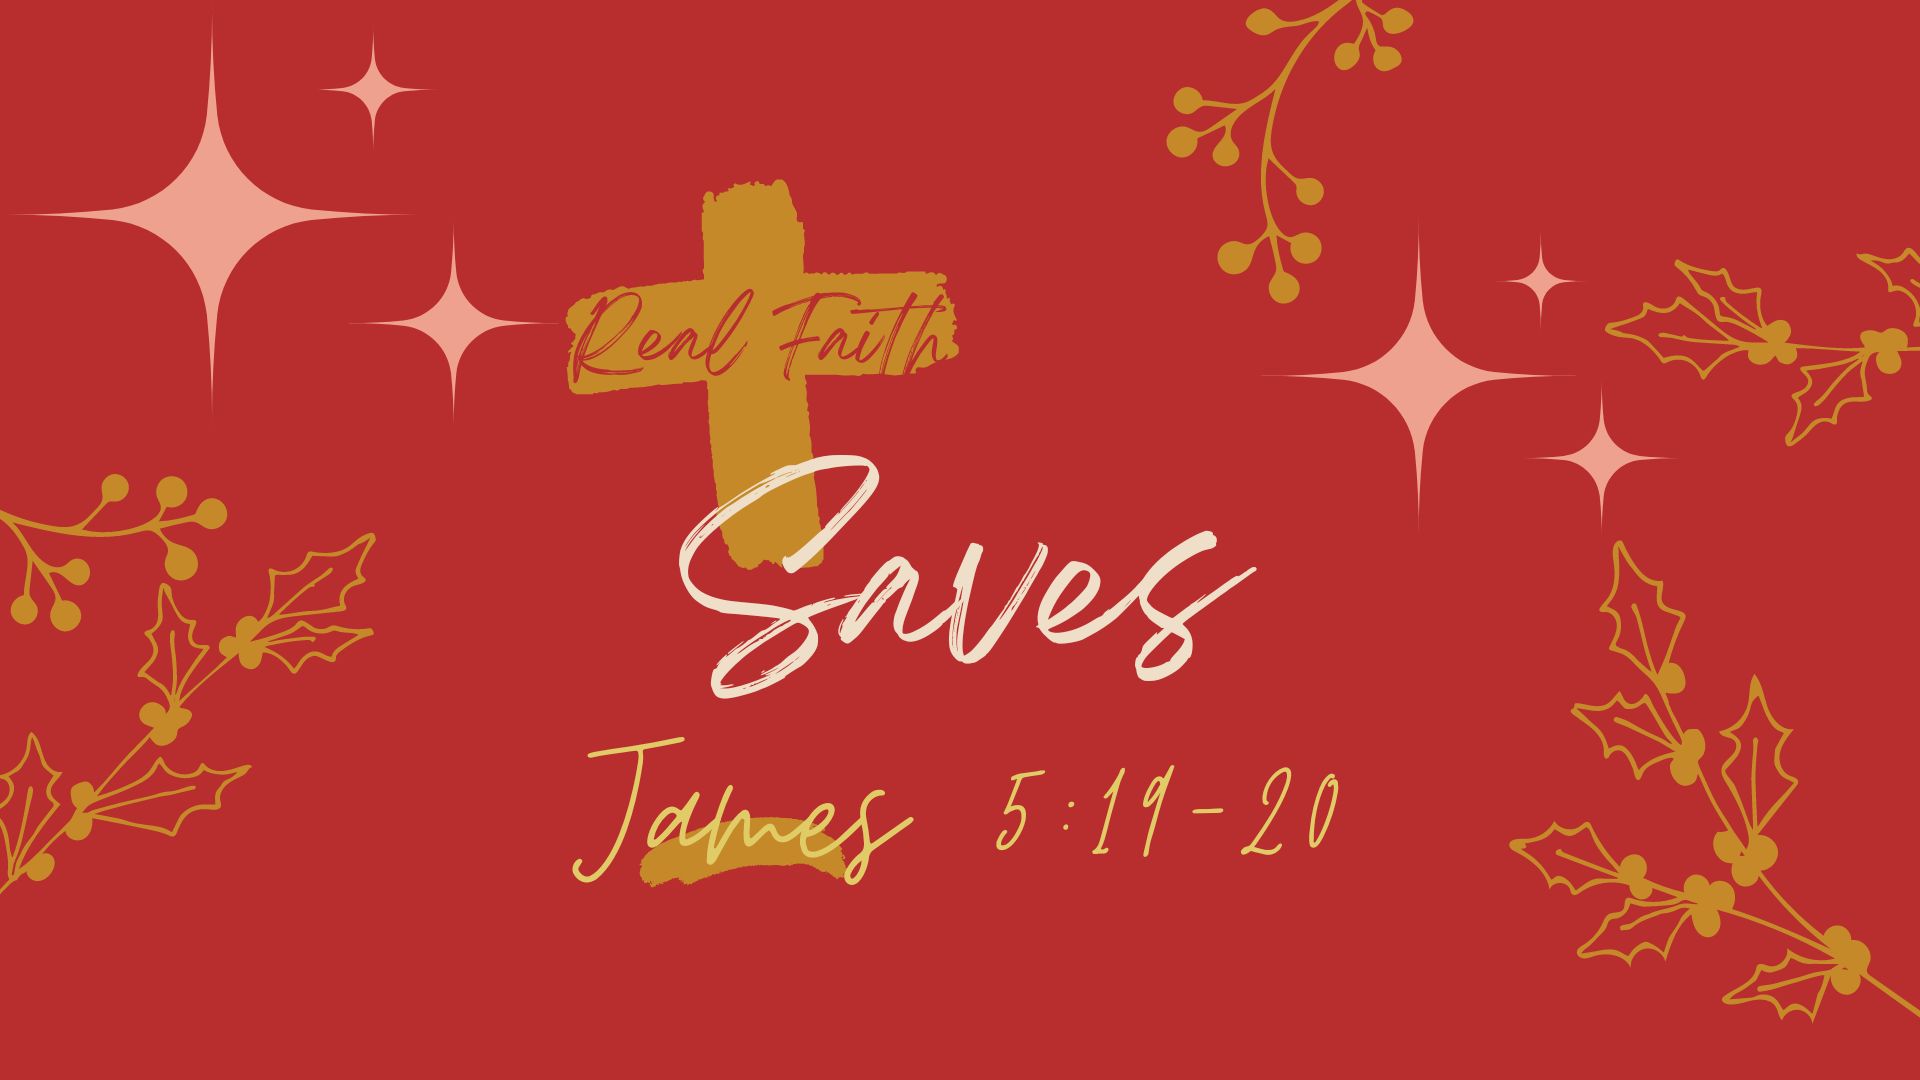 Real Faith 12 - Saves - Christmas Celebration